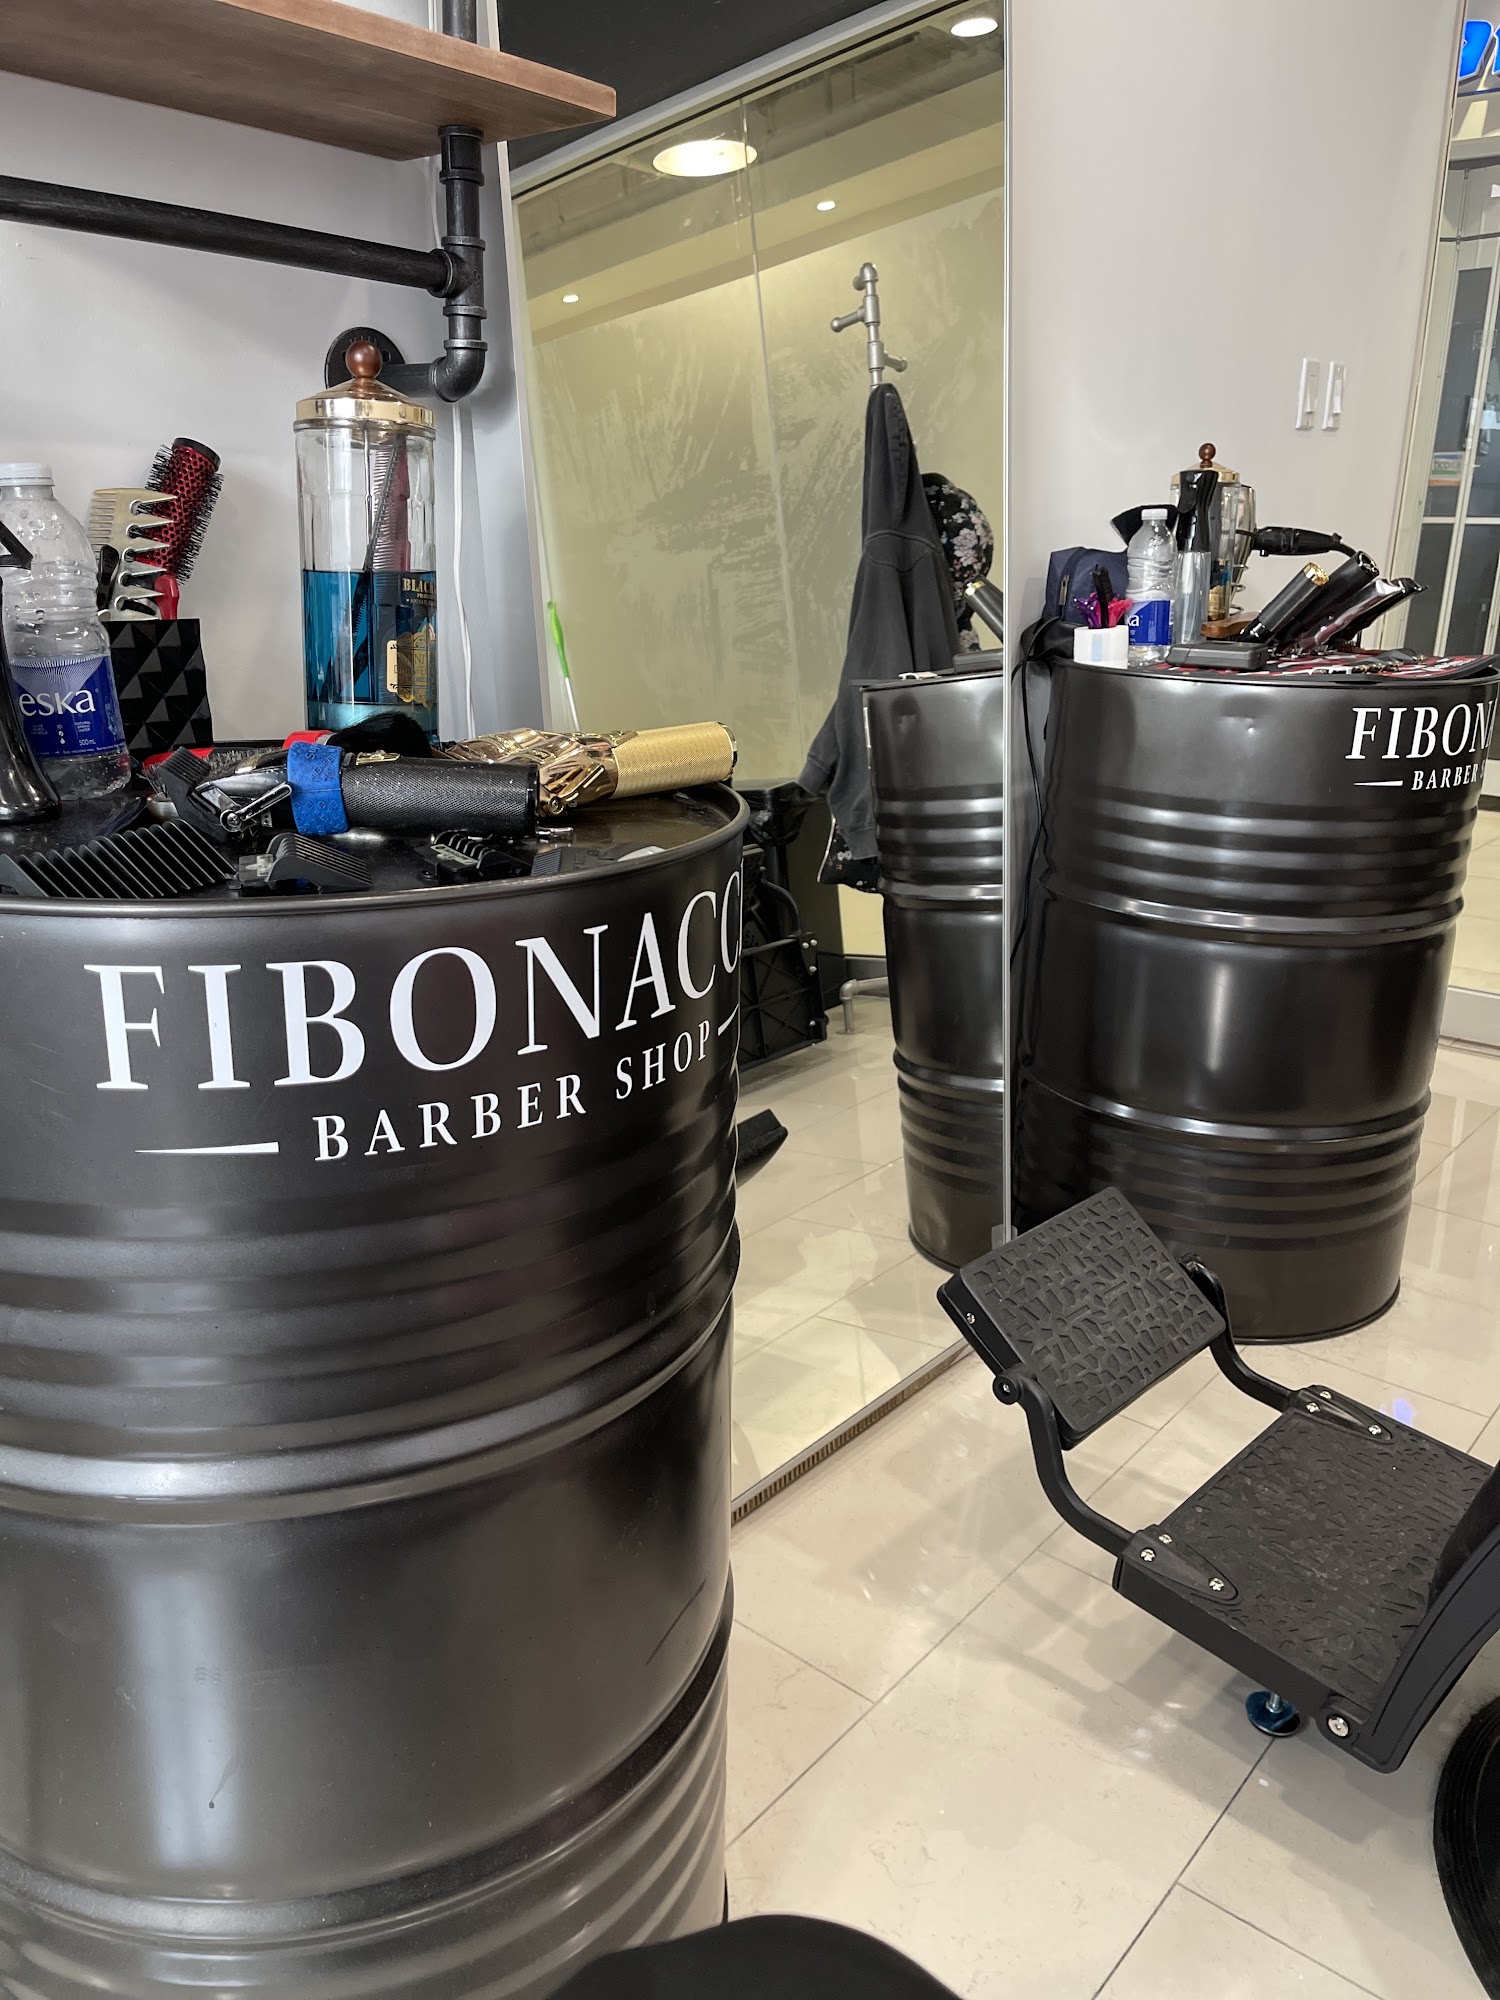 Fibonacci barbershop